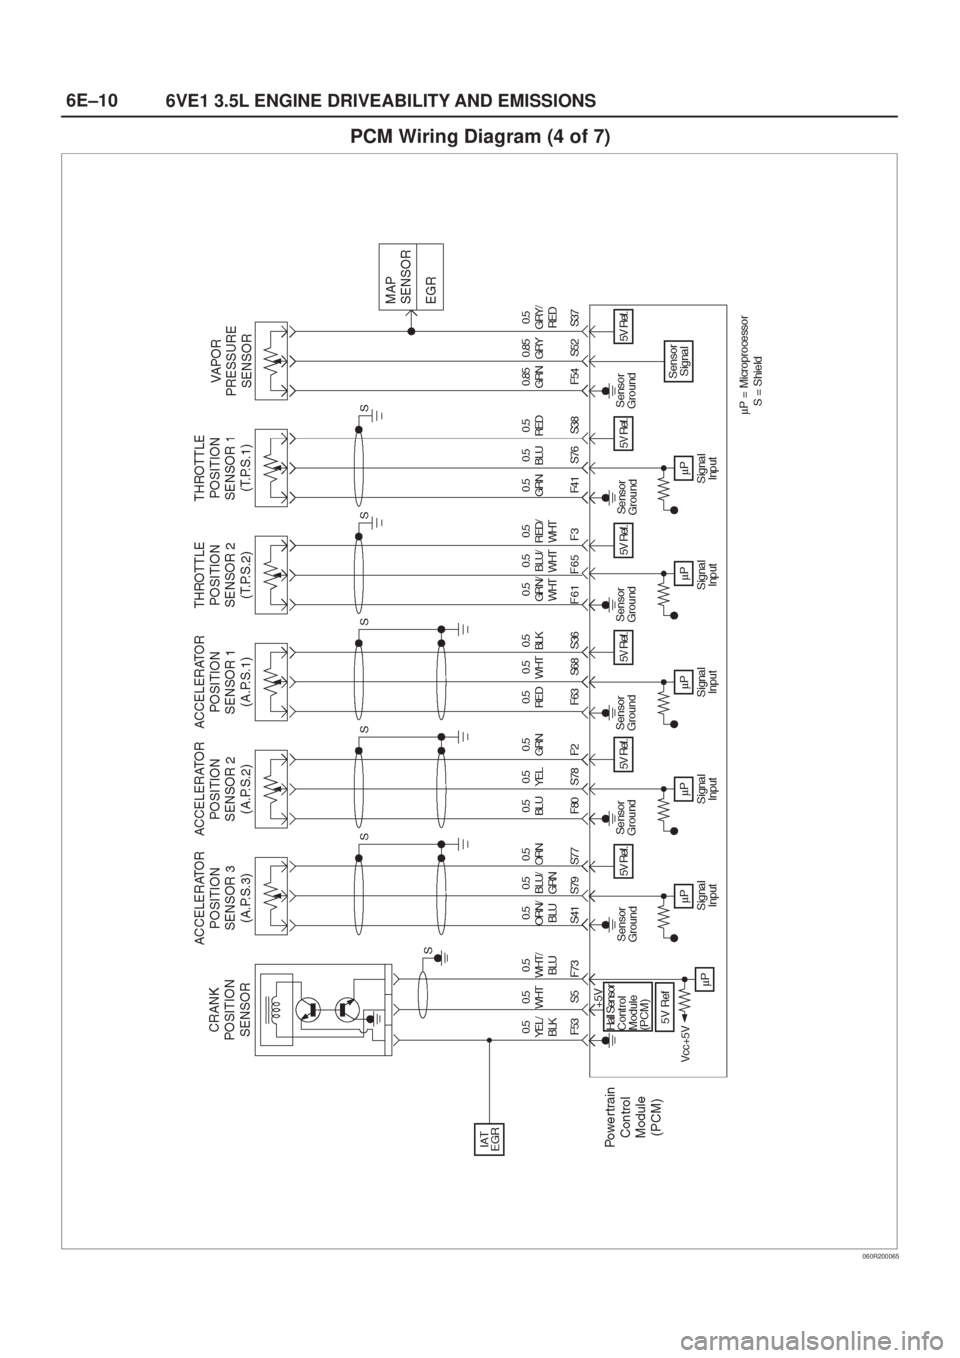 ISUZU AXIOM 2002  Service Repair Manual 6E±10
6VE1 3.5L ENGINE DRIVEABILITY AND EMISSIONS
PCM Wiring Diagram (4 of 7)
060R200065 